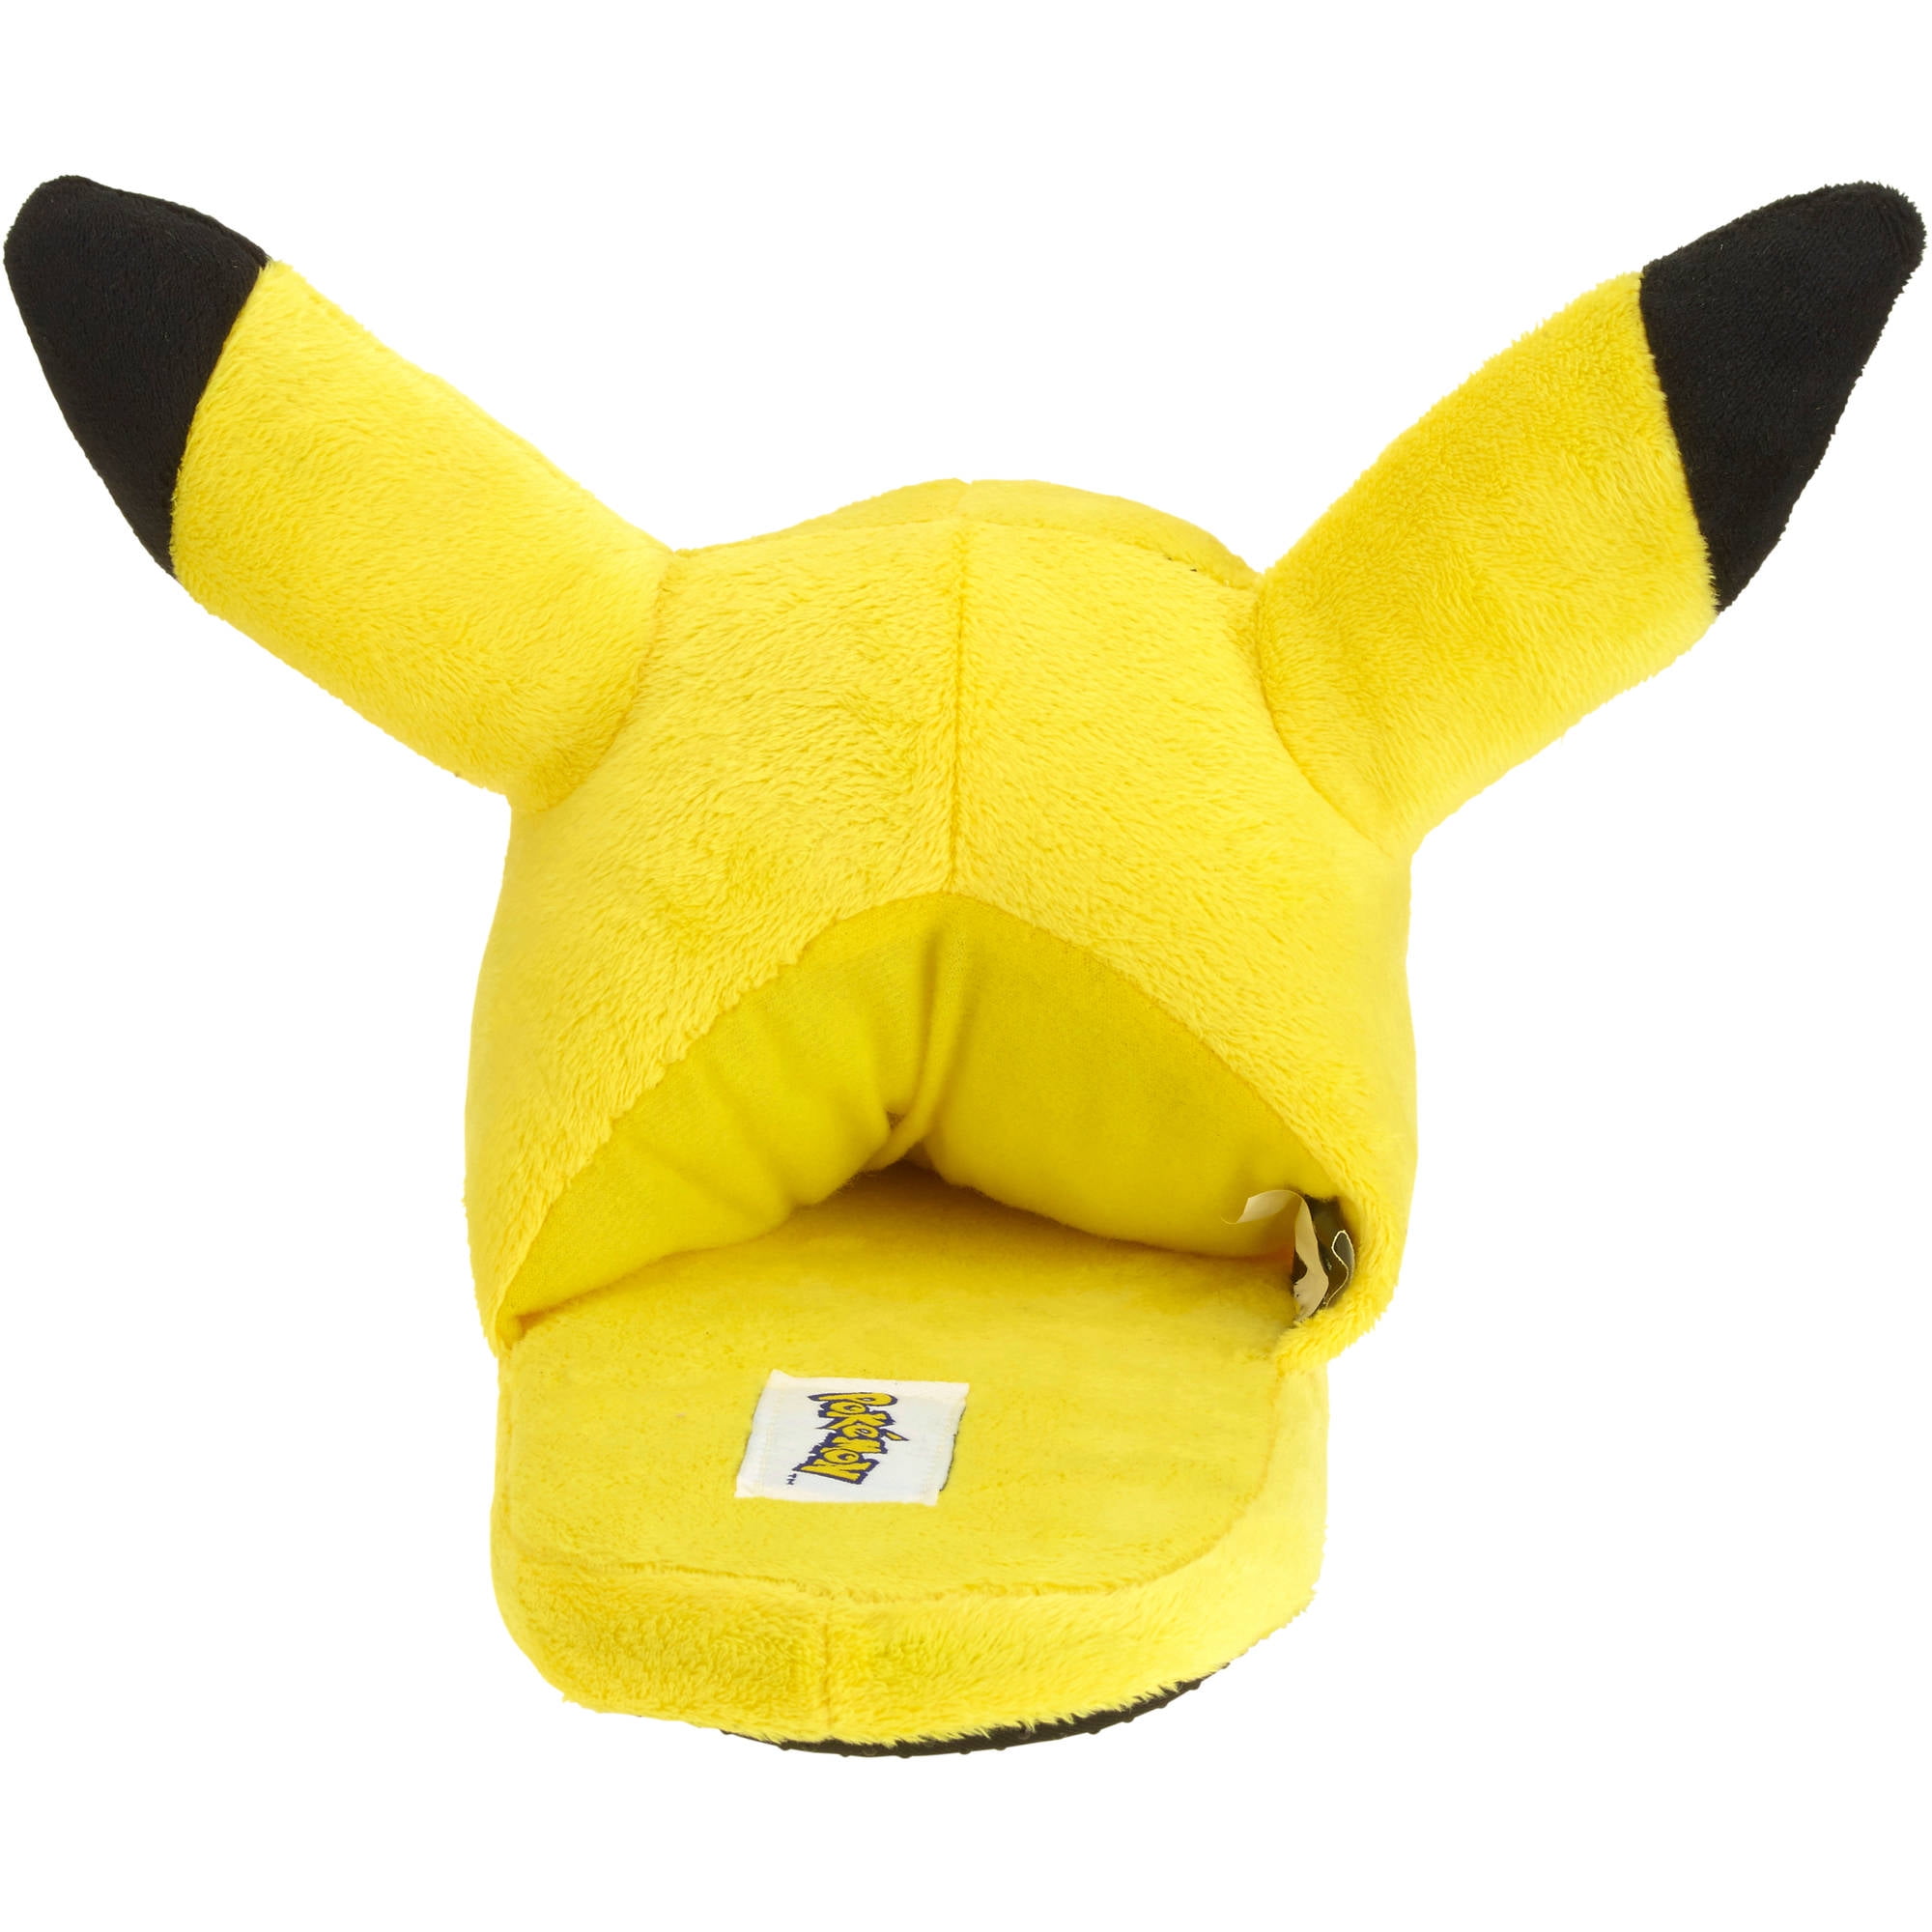 Pokémon - Women's Pikachu Slipper 